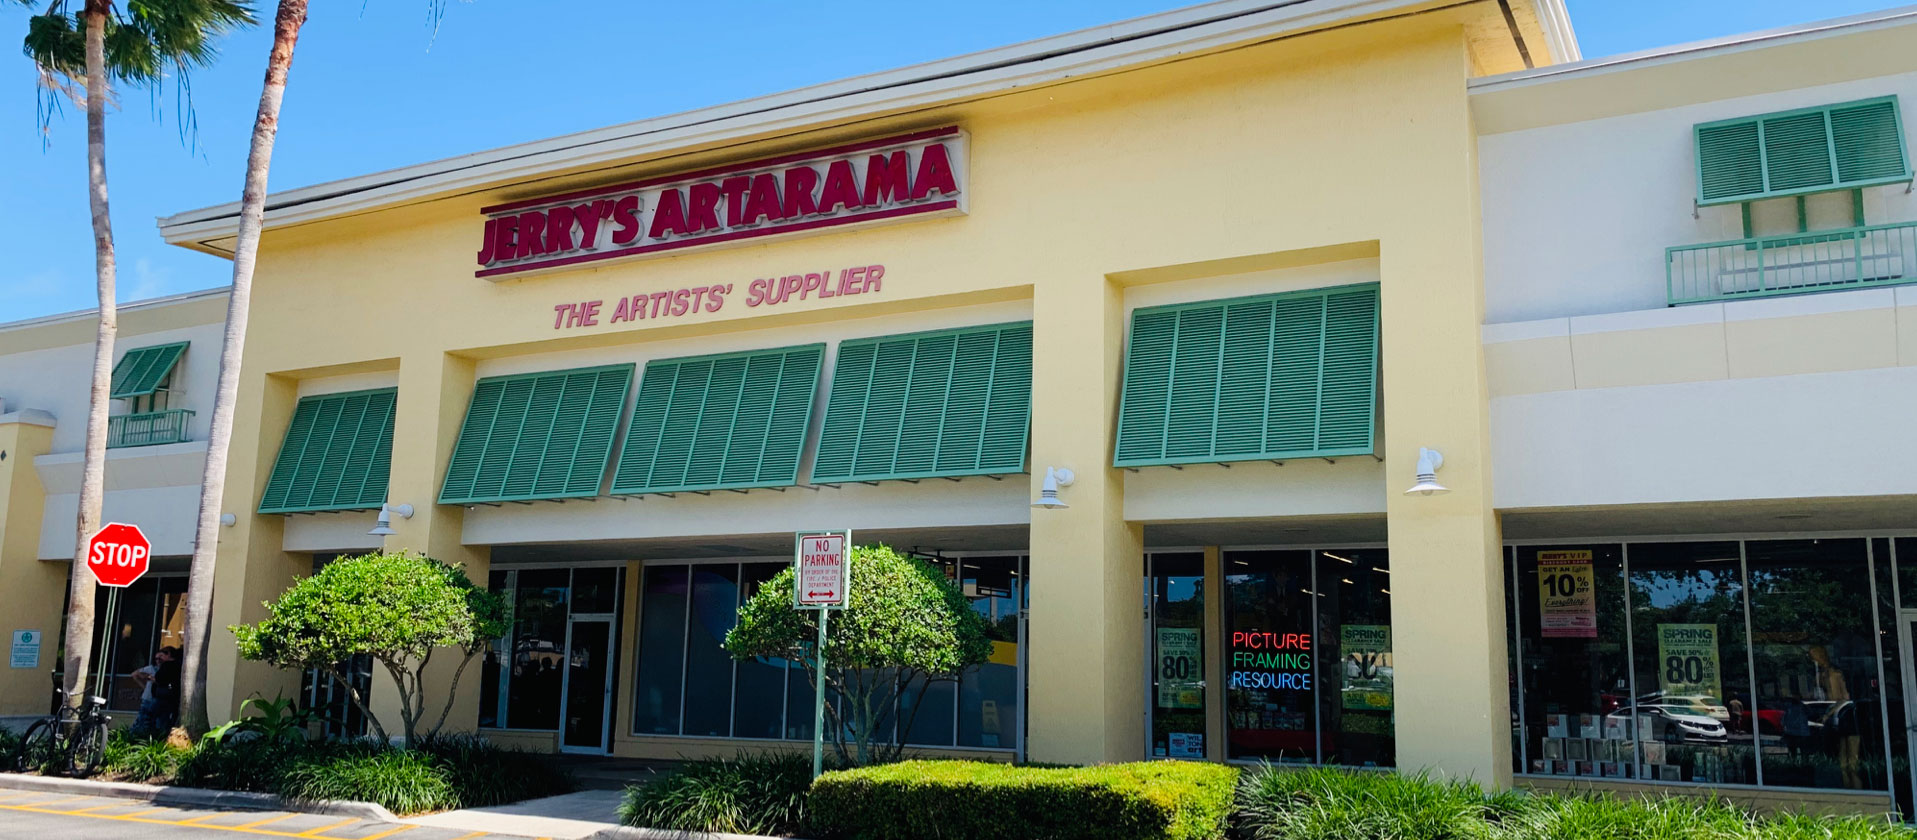 Jerry's Artarama Wholesale Club Store - Miami